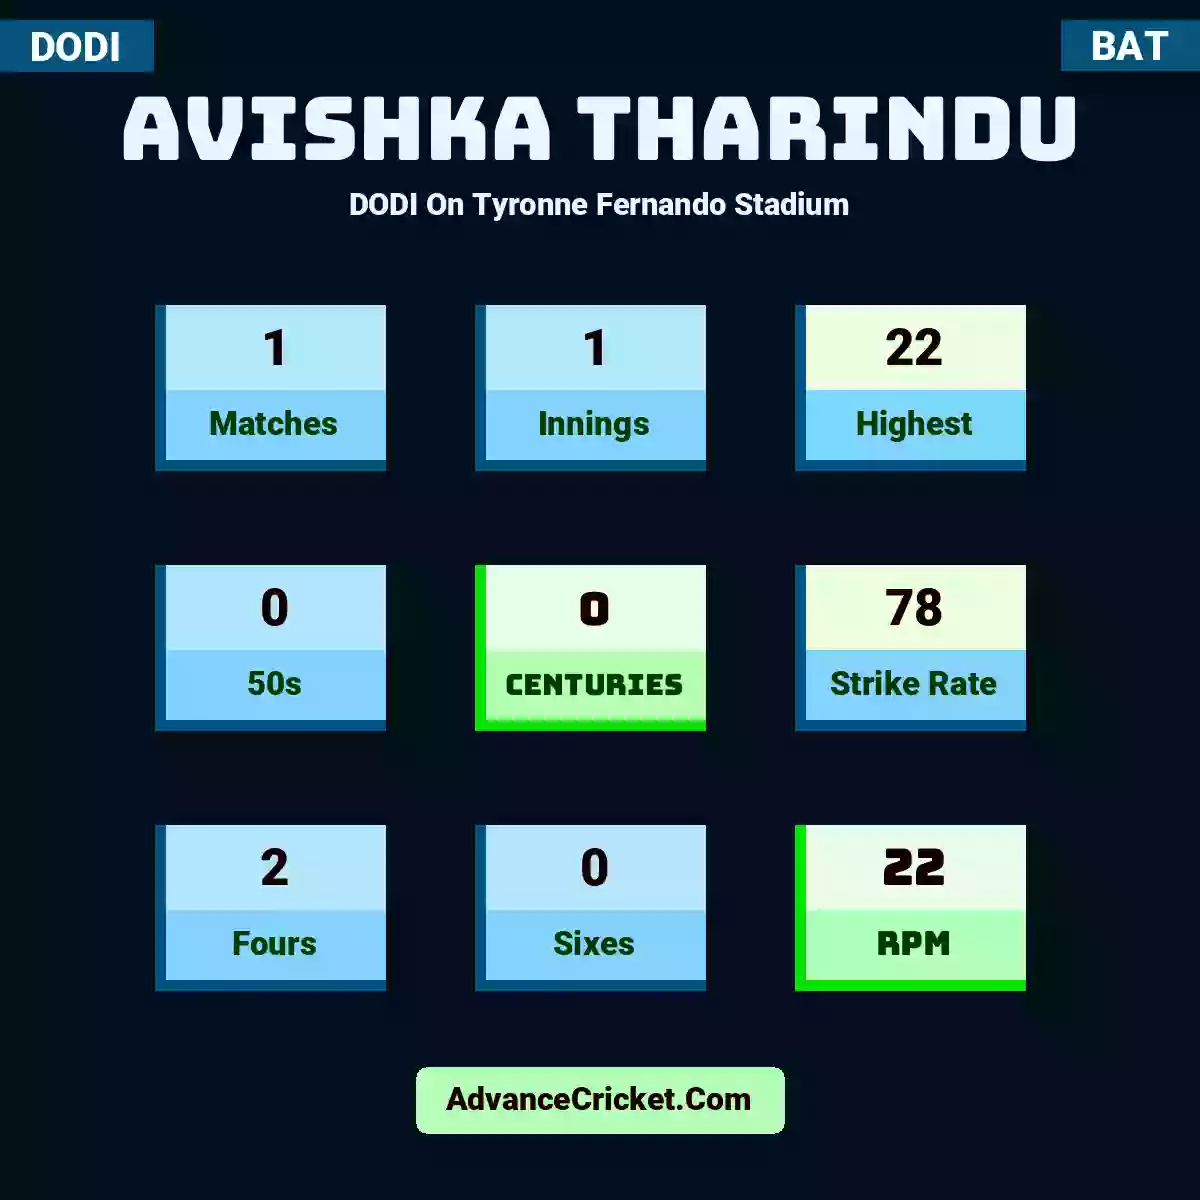 Avishka Tharindu DODI  On Tyronne Fernando Stadium, Avishka Tharindu played 1 matches, scored 22 runs as highest, 0 half-centuries, and 0 centuries, with a strike rate of 78. A.Tharindu hit 2 fours and 0 sixes, with an RPM of 22.